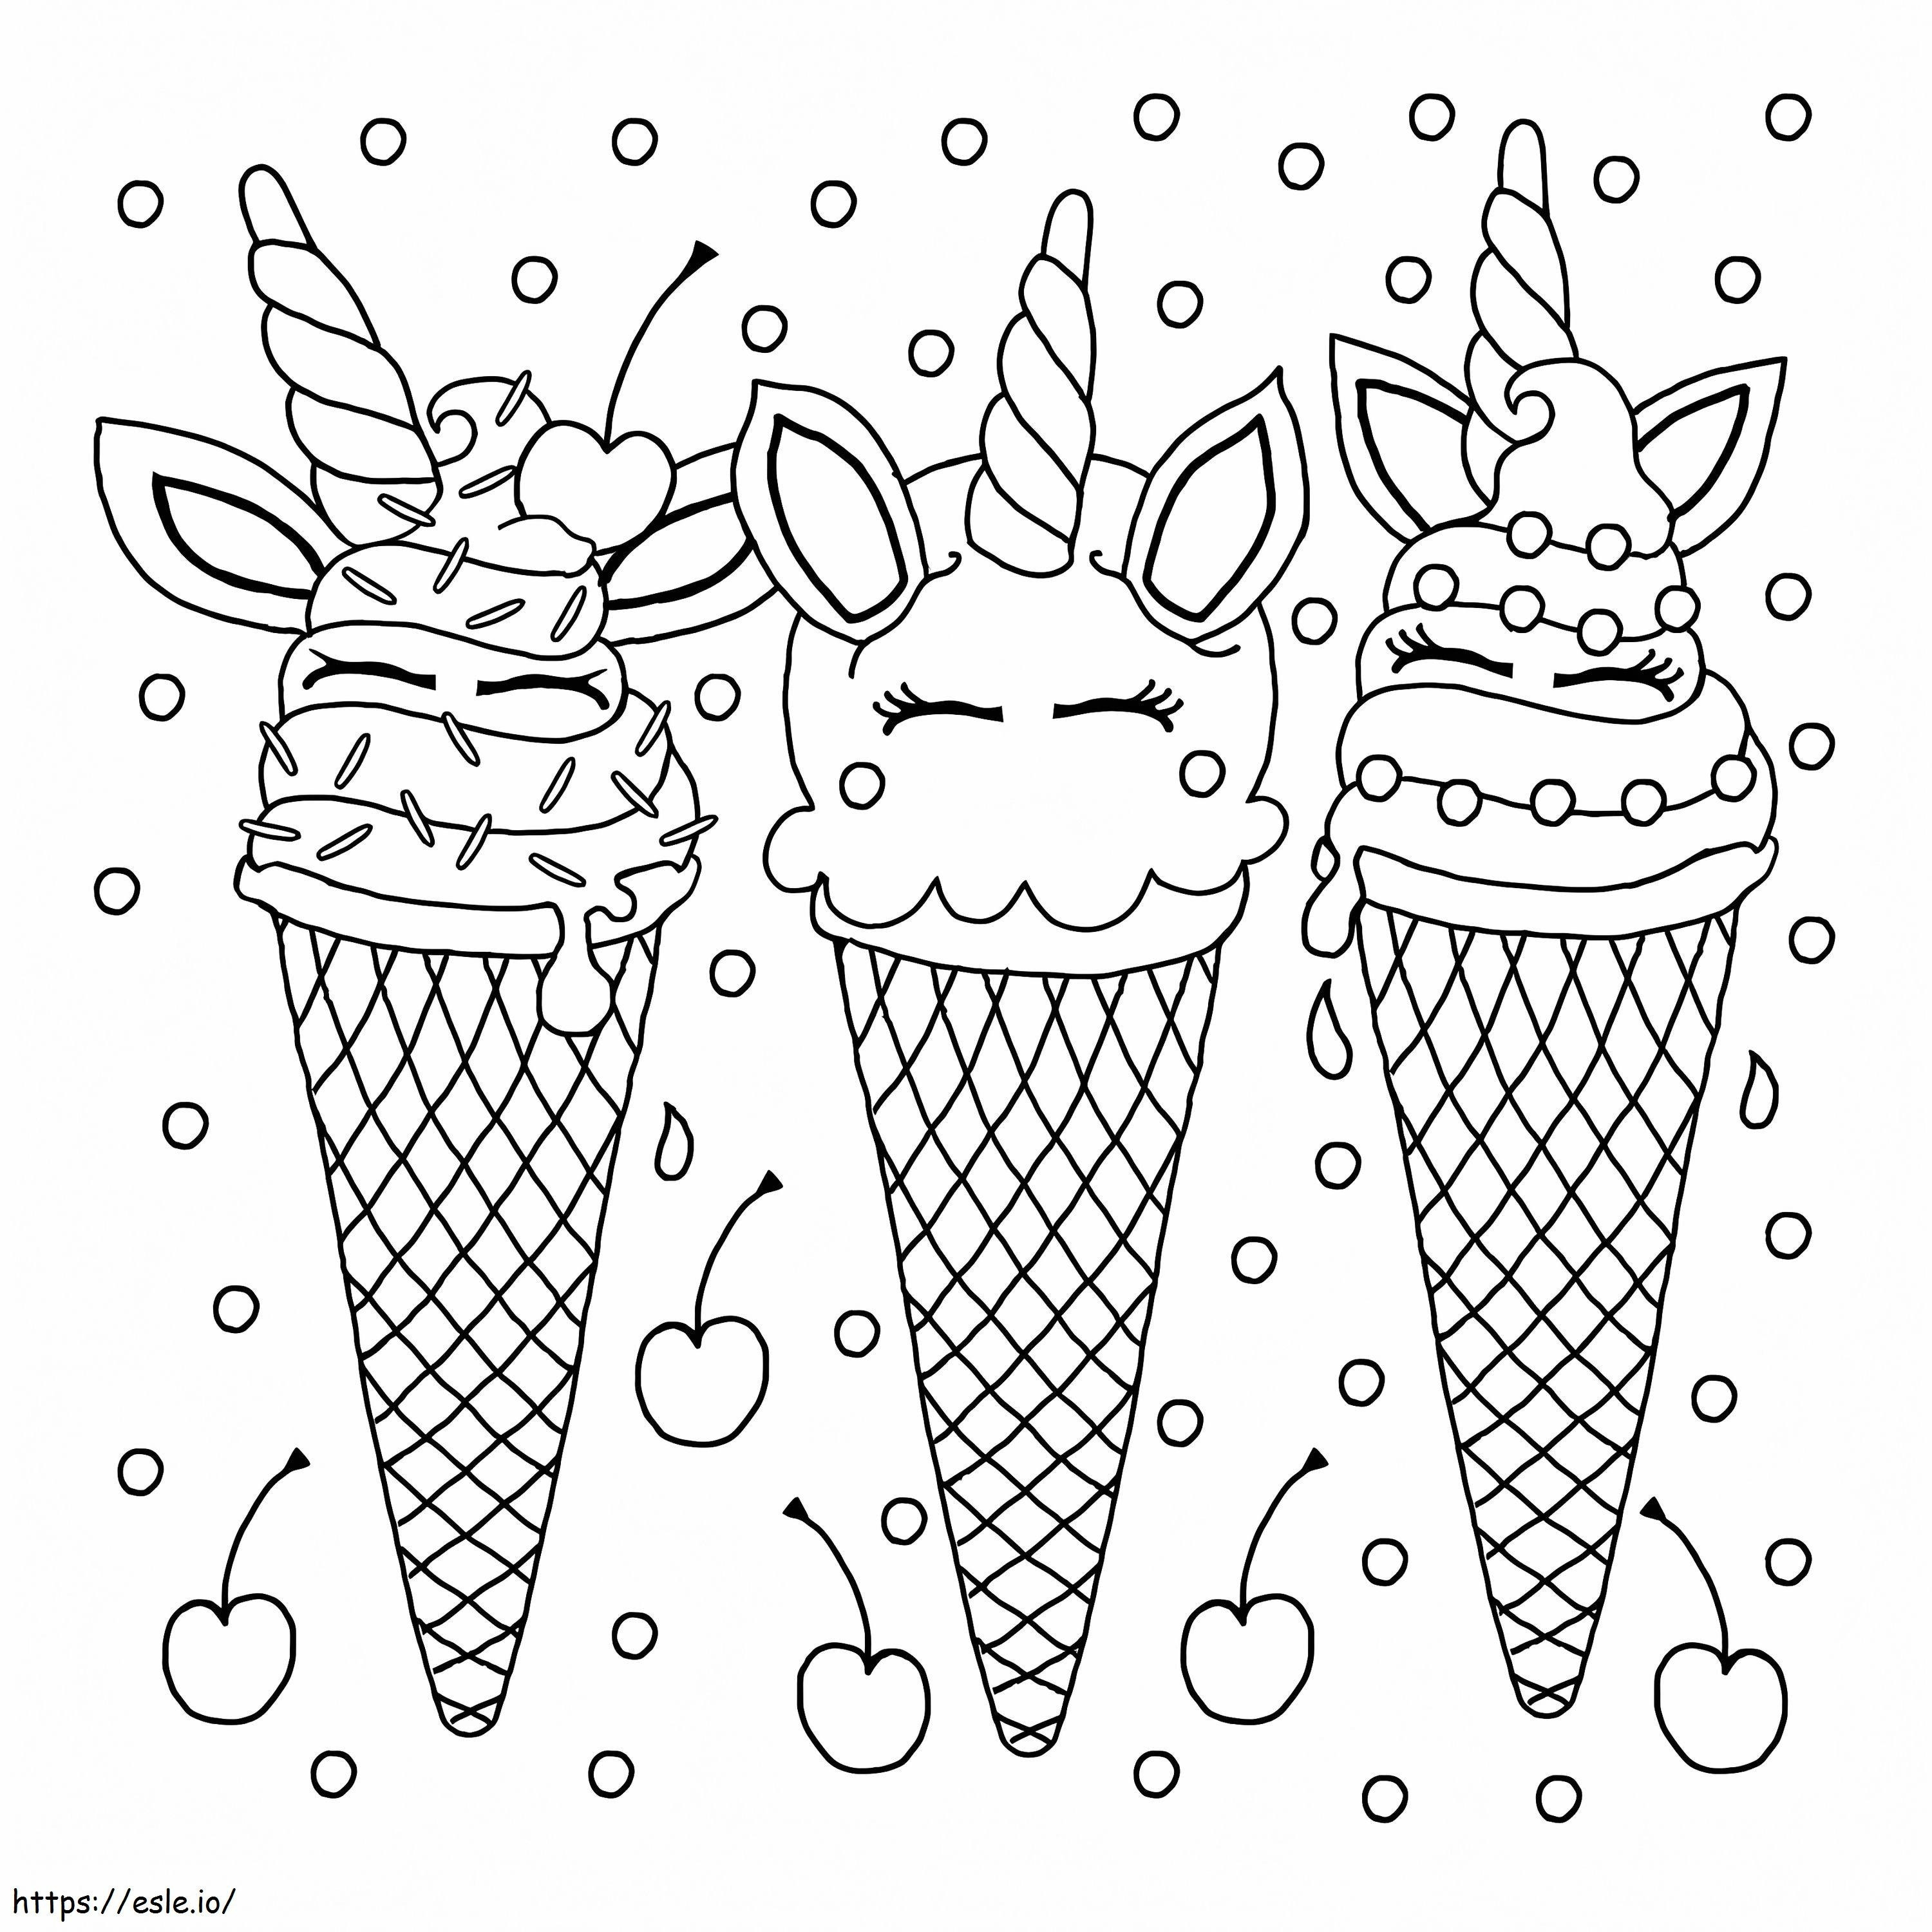 Kawaii Ice Cream 1 coloring page